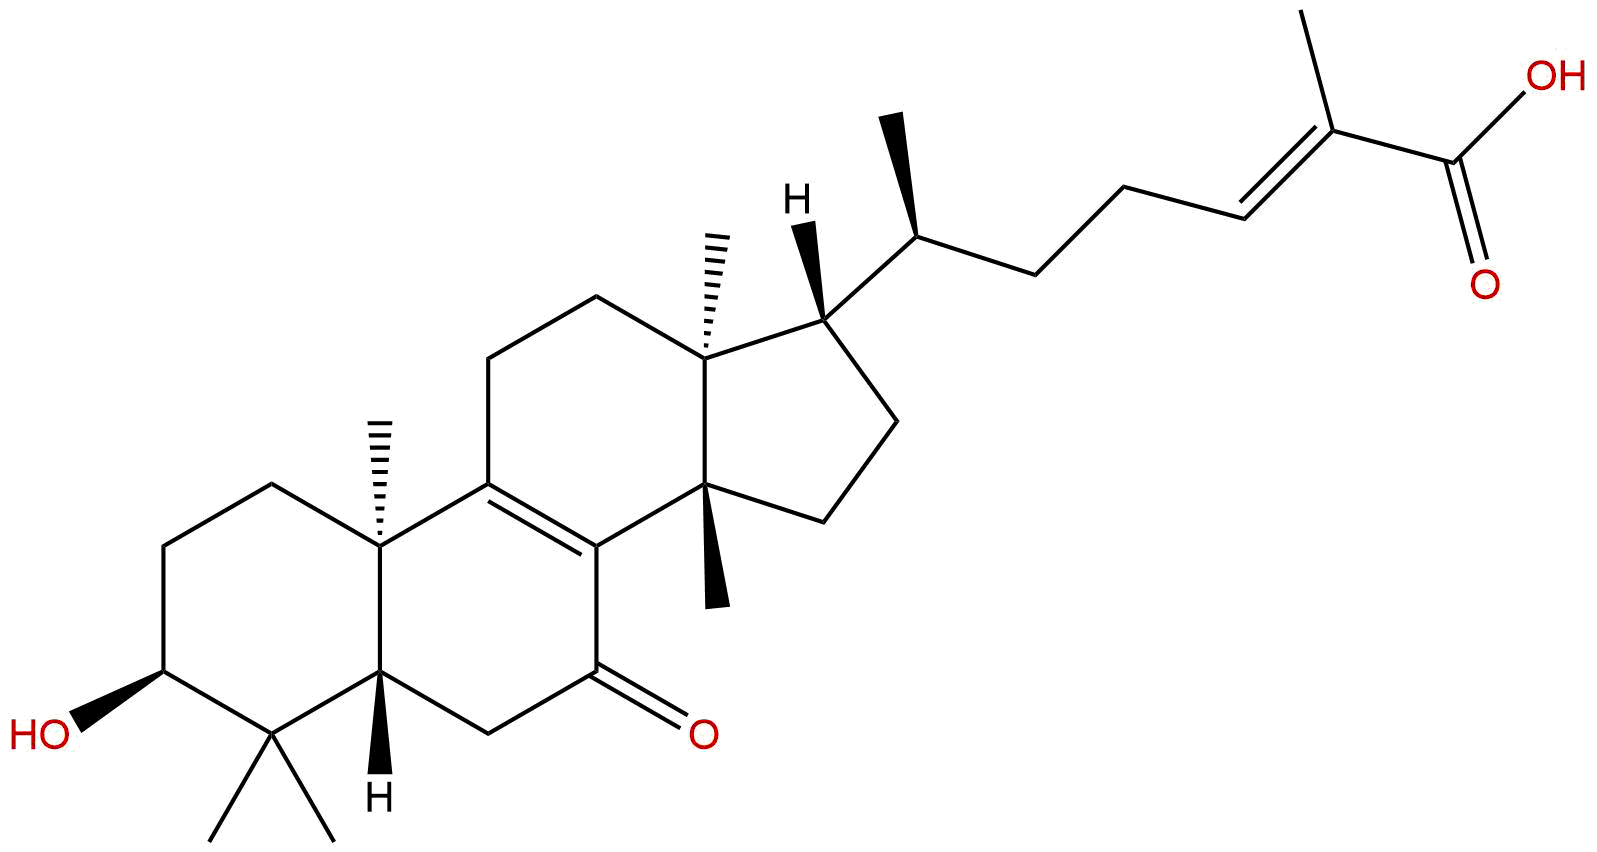 7-Oxoganoderic acid Z